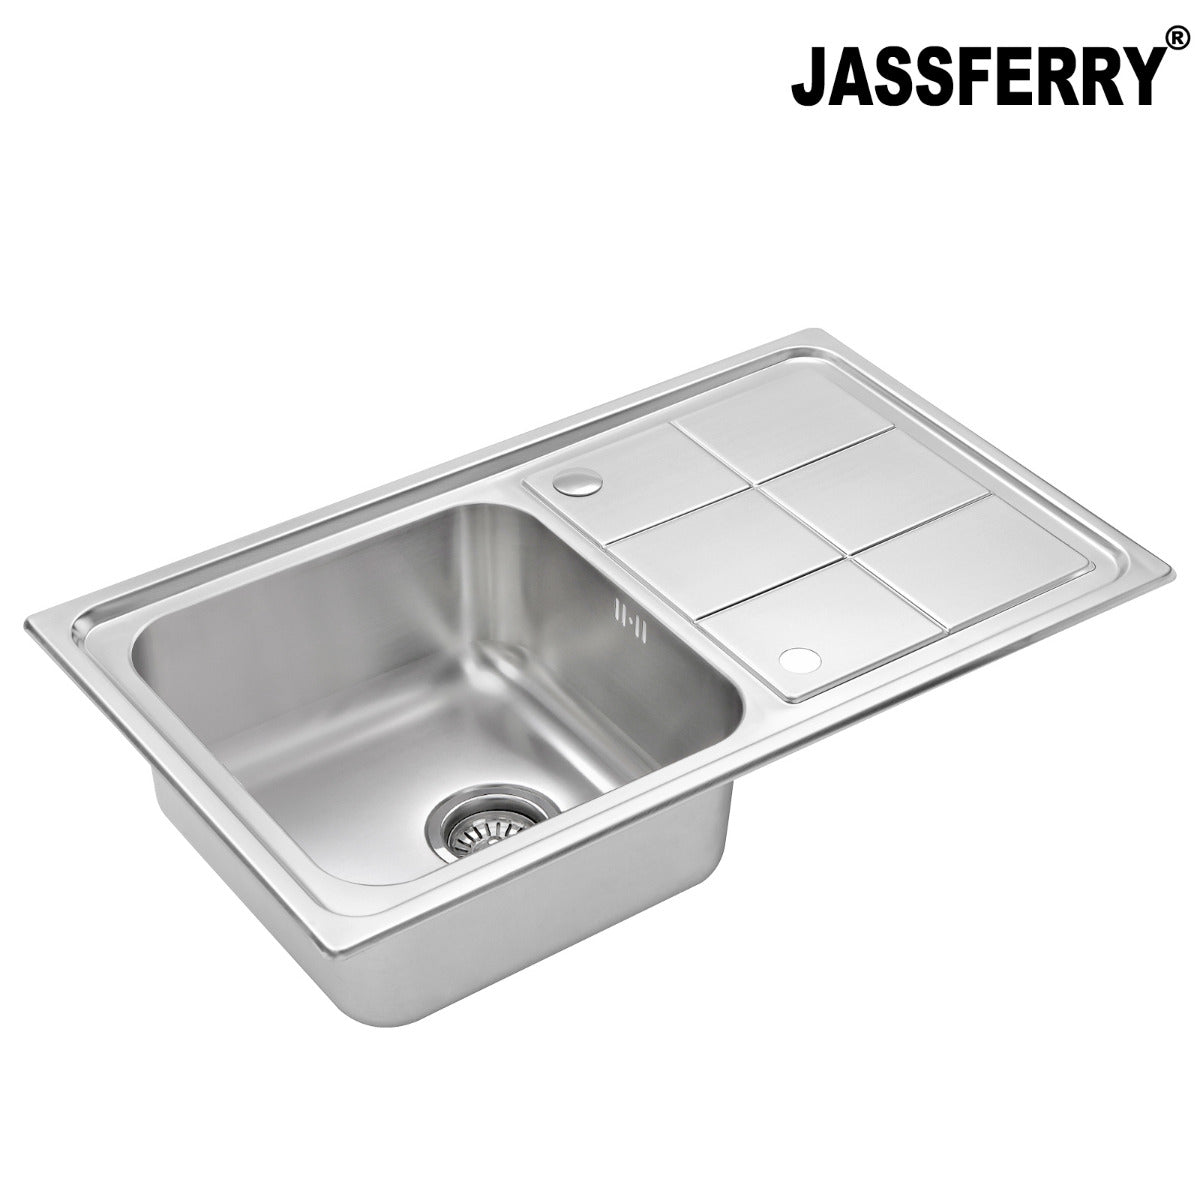 JassferryJASSFERRY Stainless Steel Kitchen Sink Single 1 Bowl Reversible Rectangle DrainerKitchen Sinks